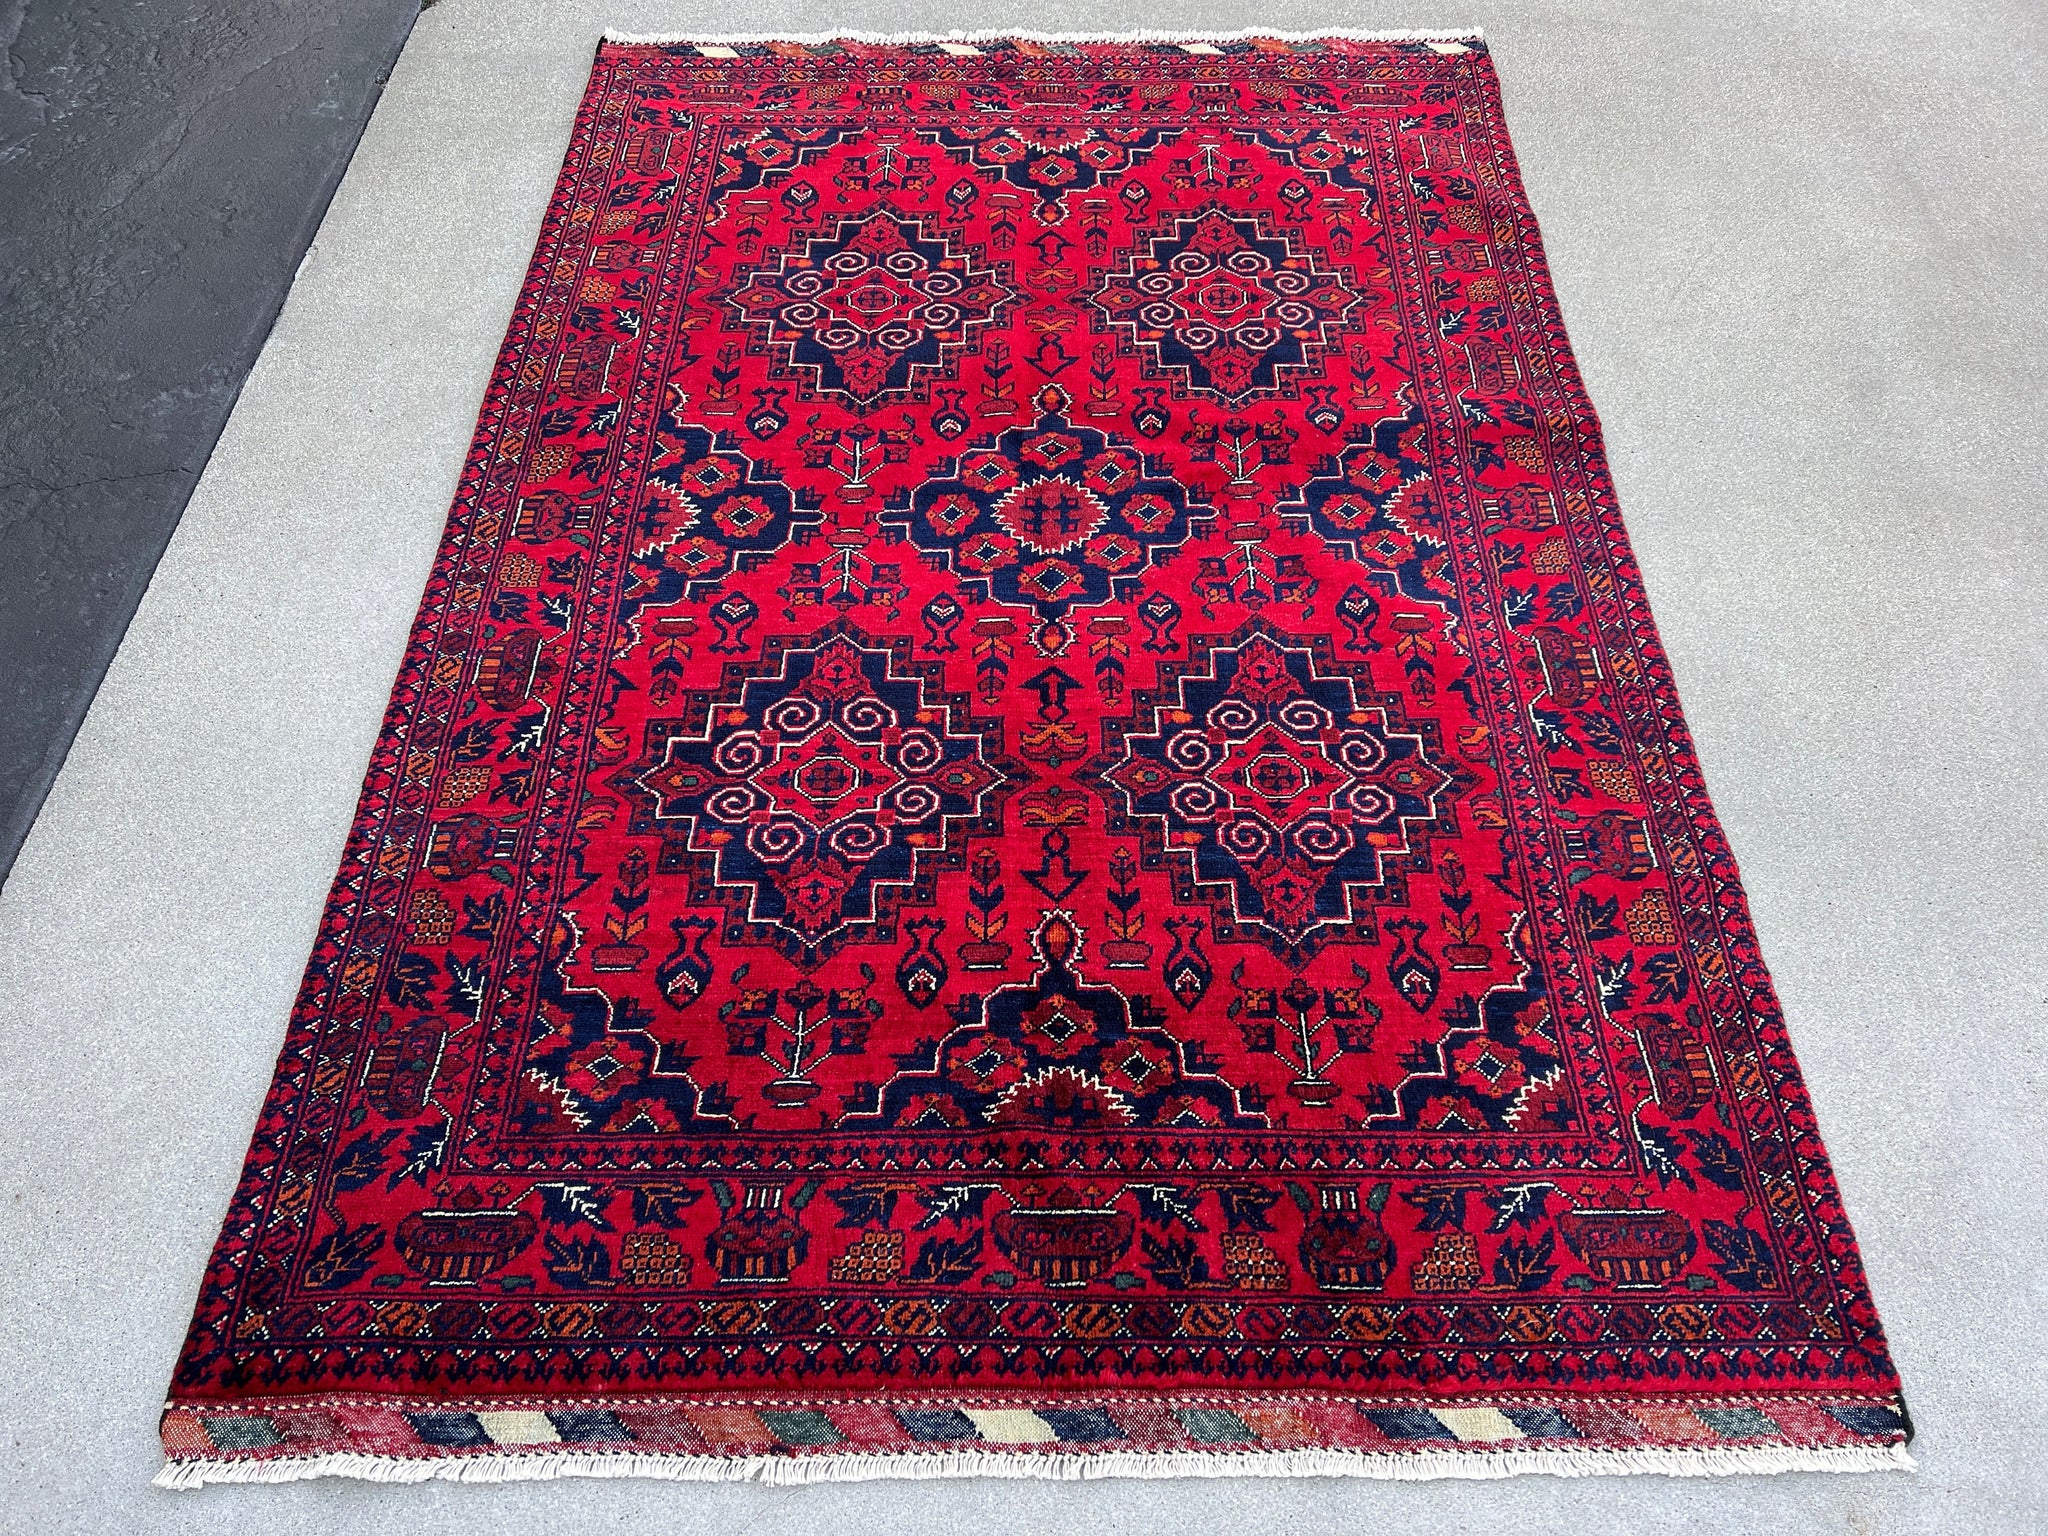 4x6 (120x185) Fair Trade Handmade Afghan Rug | Cherry Red Crimson Black Ivory Burnt Orange Charcoal Grey | Khal Mohammadi Wool Tribal Boho